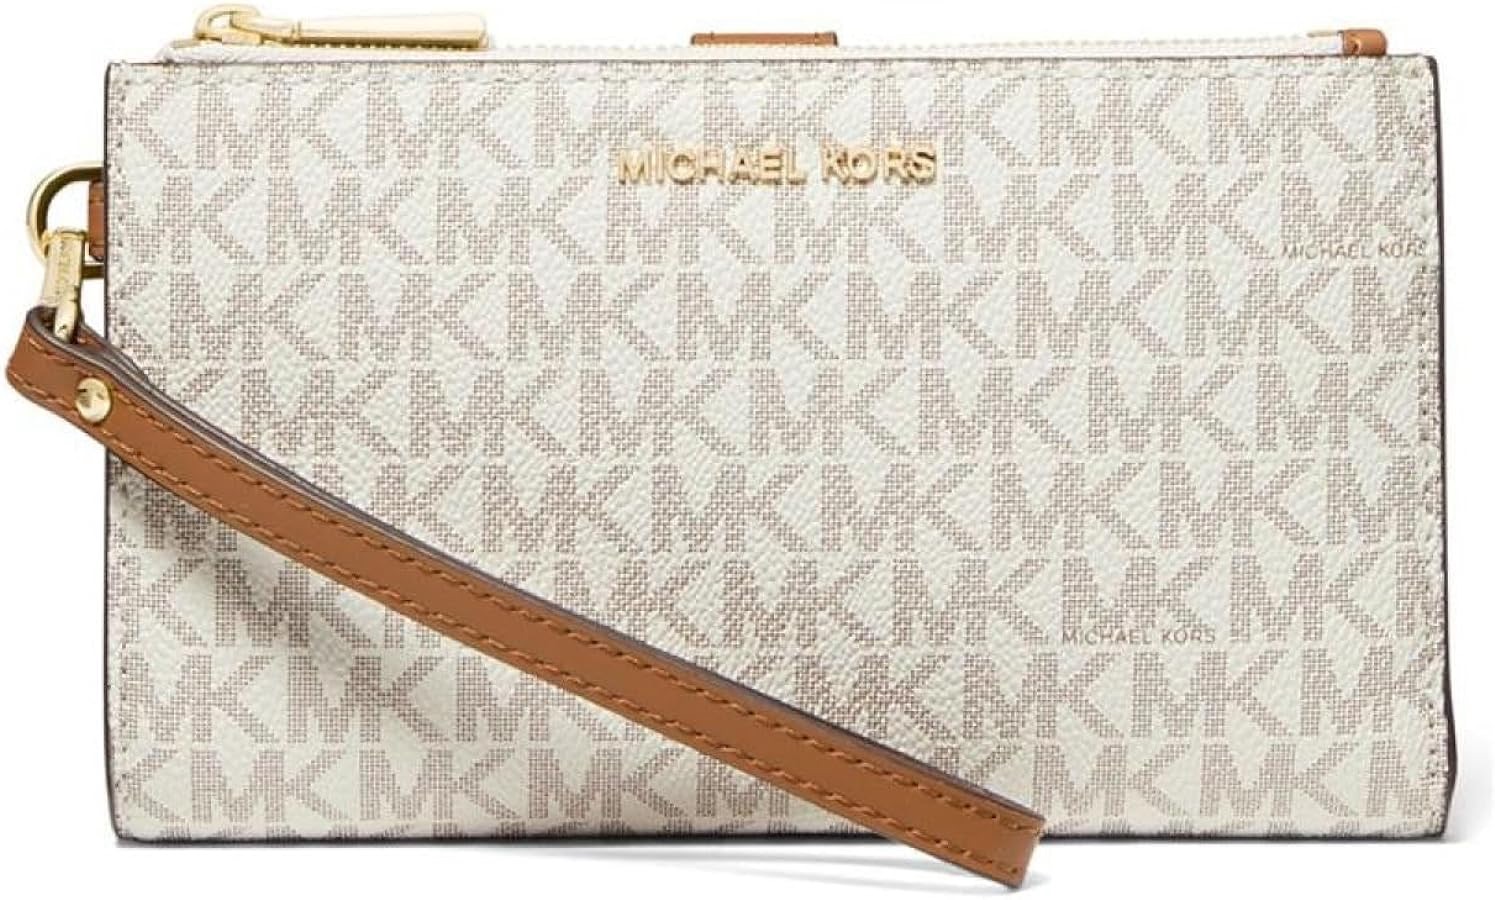 Michael Kors Jet Set Double Zip Wristlet Vanilla One Size: Handbags: Amazon.com